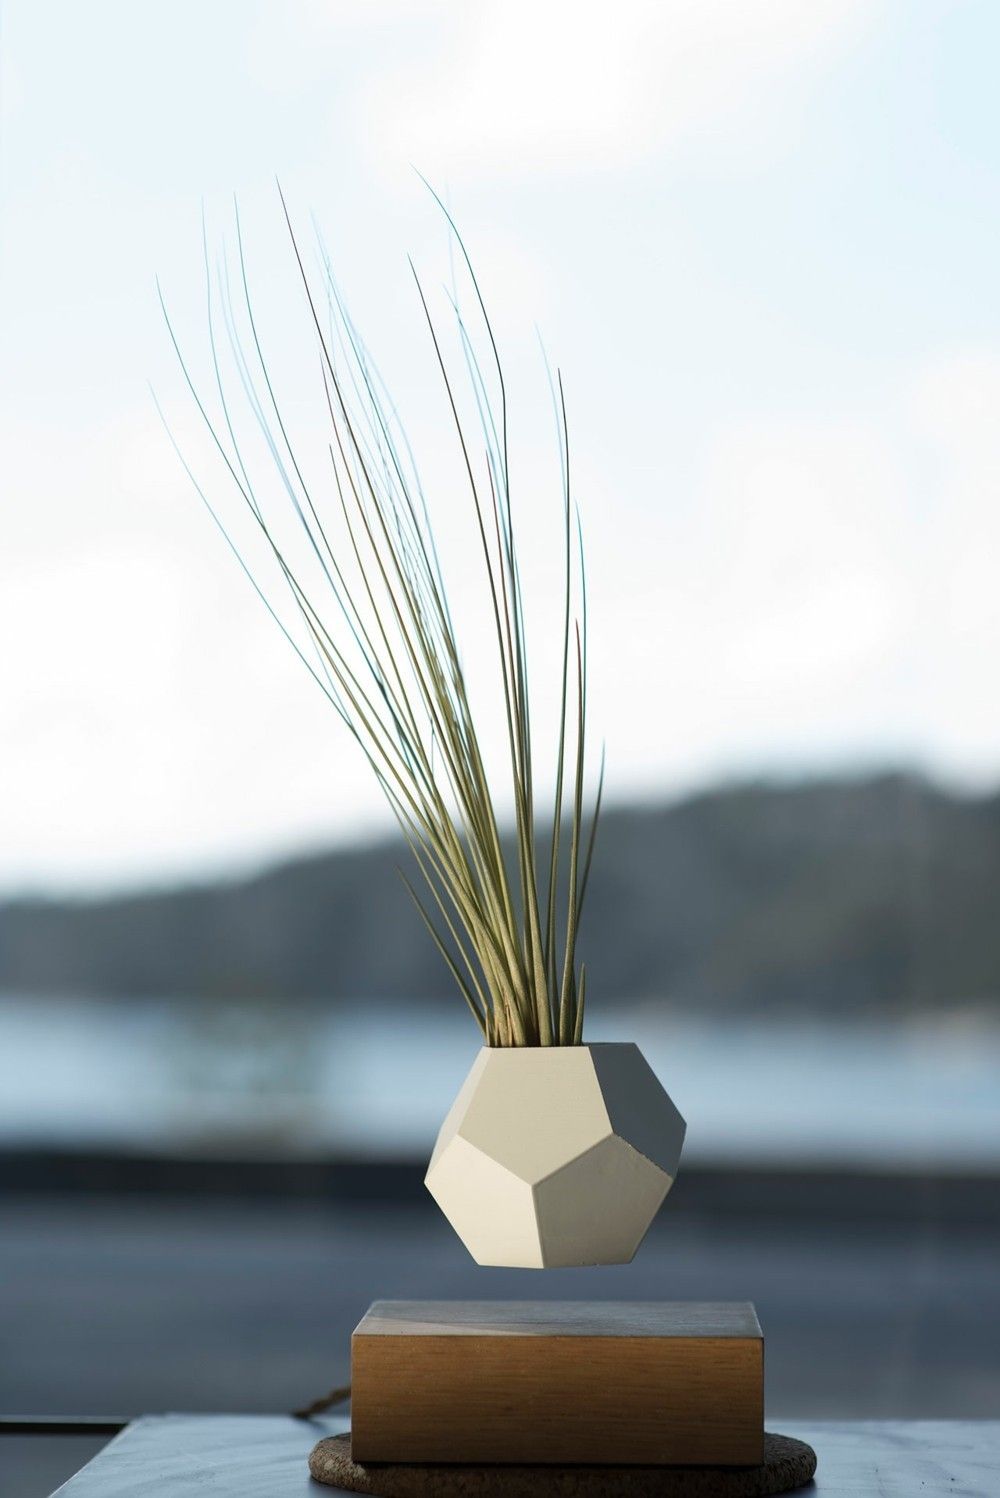 Decoration idea outdoors flower pot levitation ornamental grass